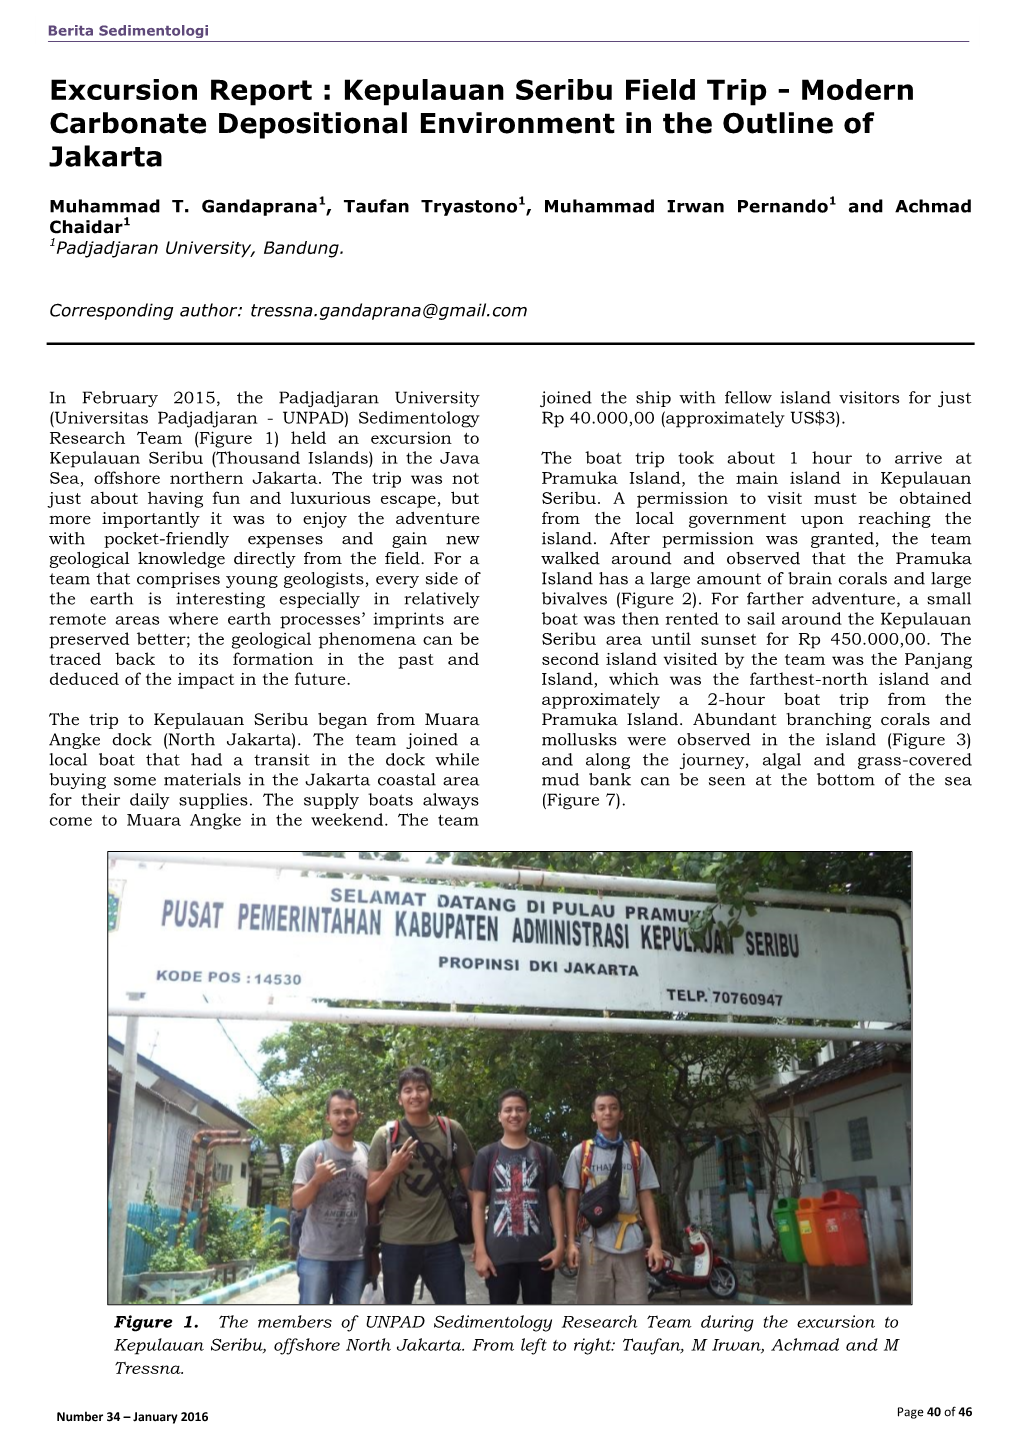 Excursion Report : Kepulauan Seribu Field Trip - Modern Carbonate Depositional Environment in the Outline of Jakarta